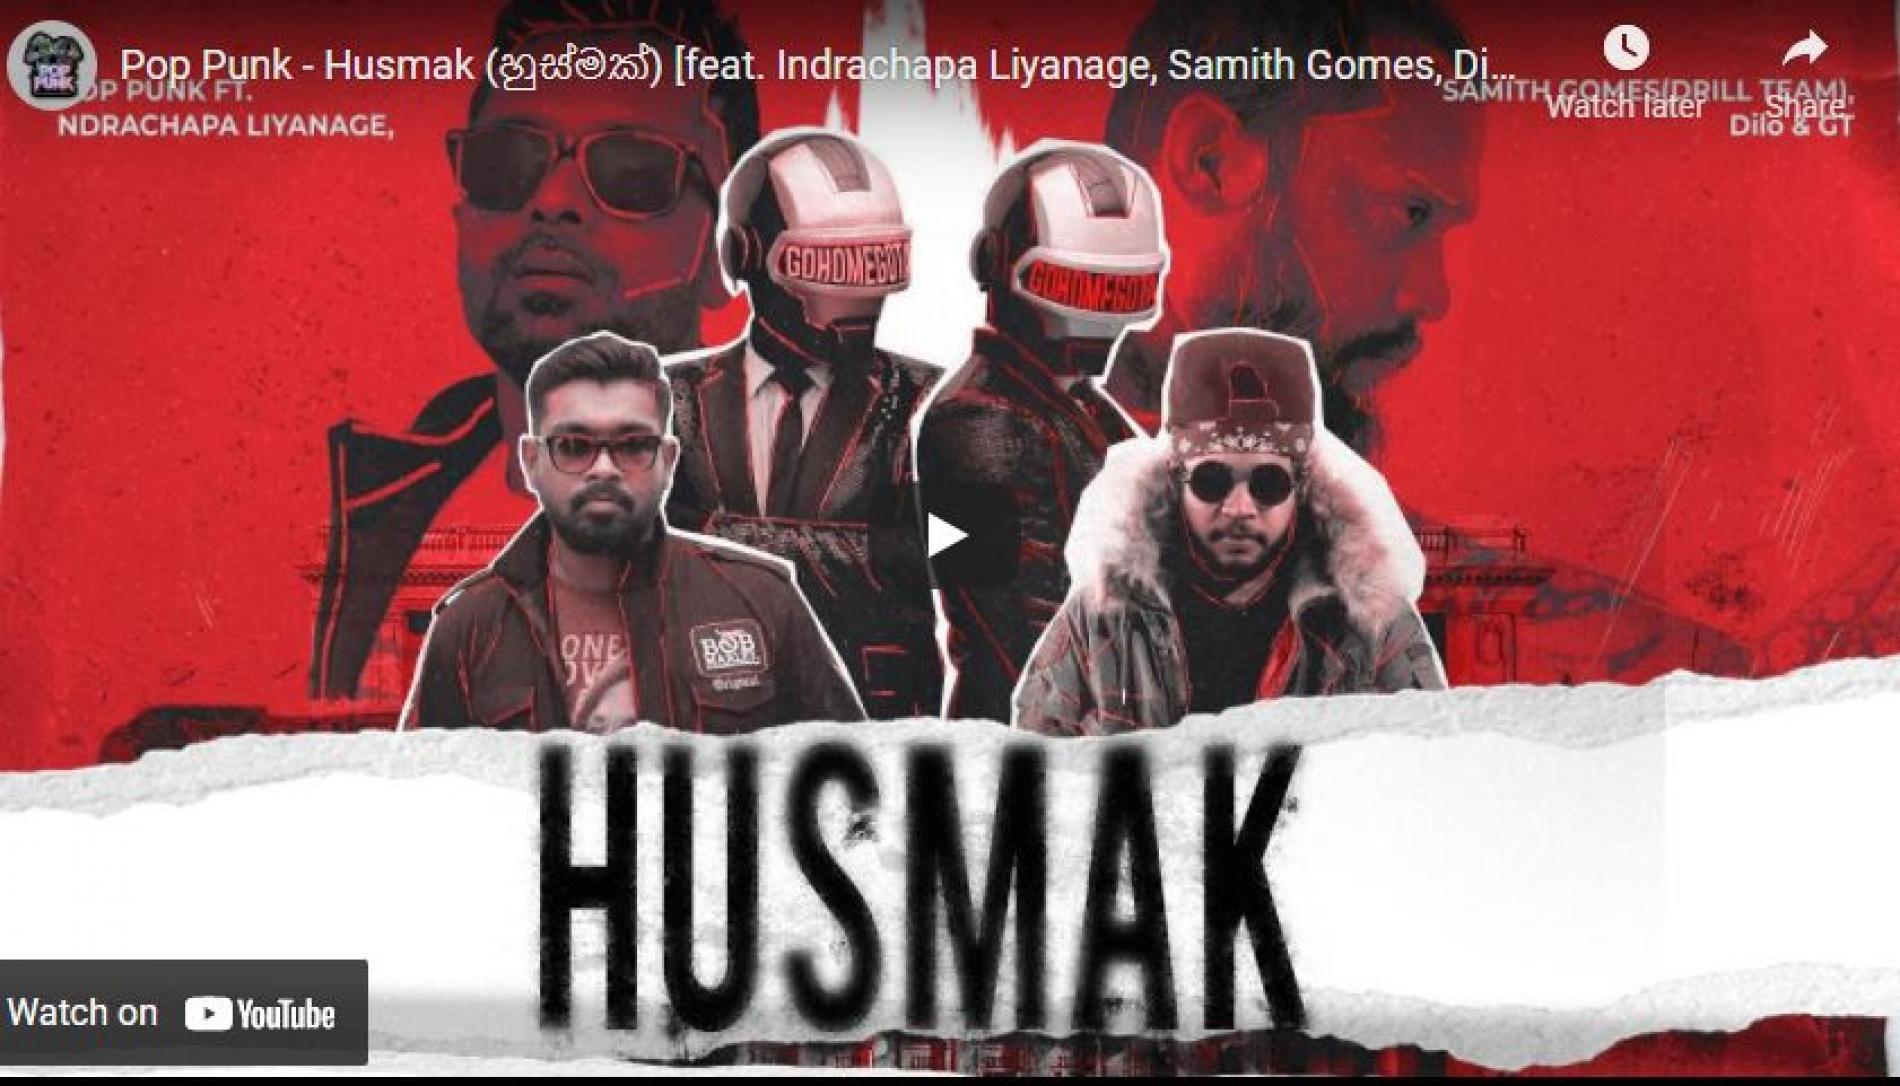 New Music : Pop Punk – Husmak (හුස්මක්) [feat. Indrachapa Liyanage, Samith Gomes, Dilo, Tilan GT] | Lyric Video